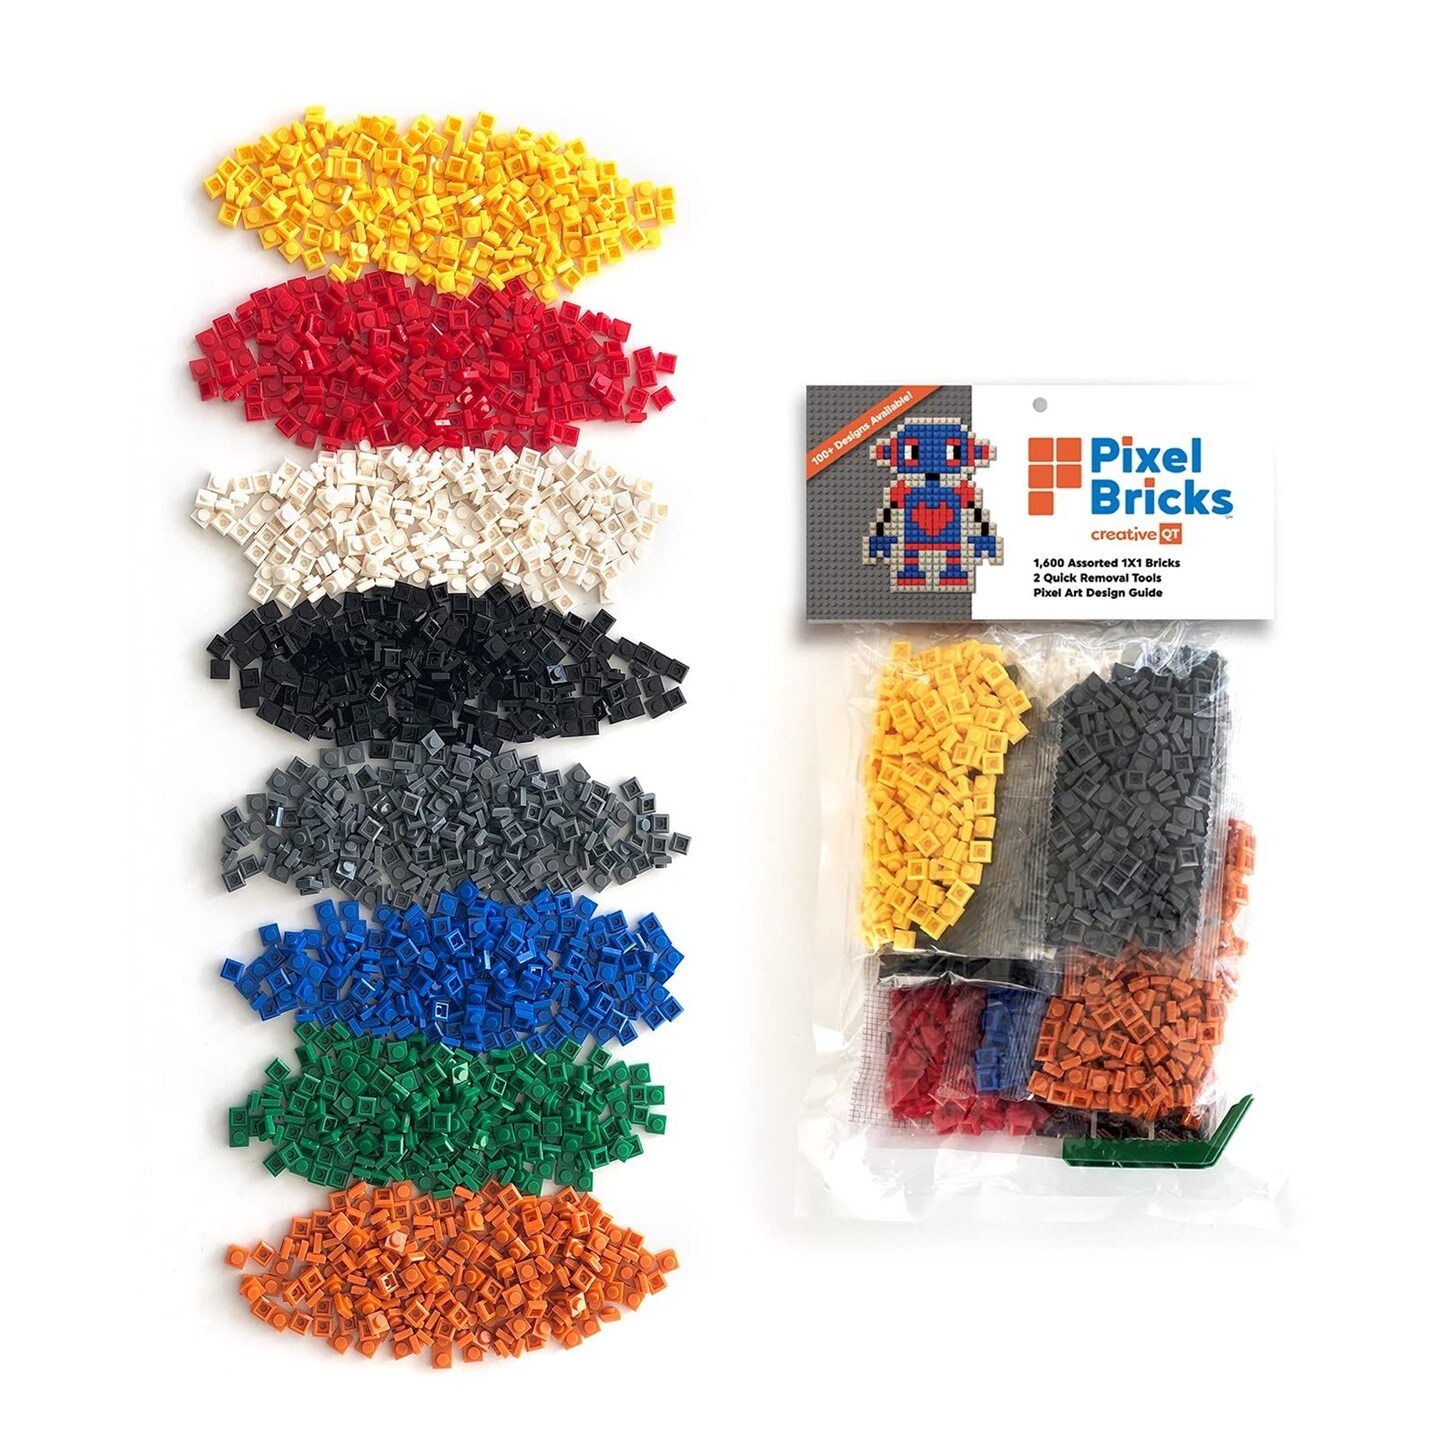 Creative QT Pixel Bricks Mosaic Kit, 8 Classic Colors, 1x1 Build Bricks, 1600 Pieces, Nano Blocks Art Set for Kids &#x26; Adults, Includes 2 Quick-Removal Tools and Design Guide, STEM Building Toy